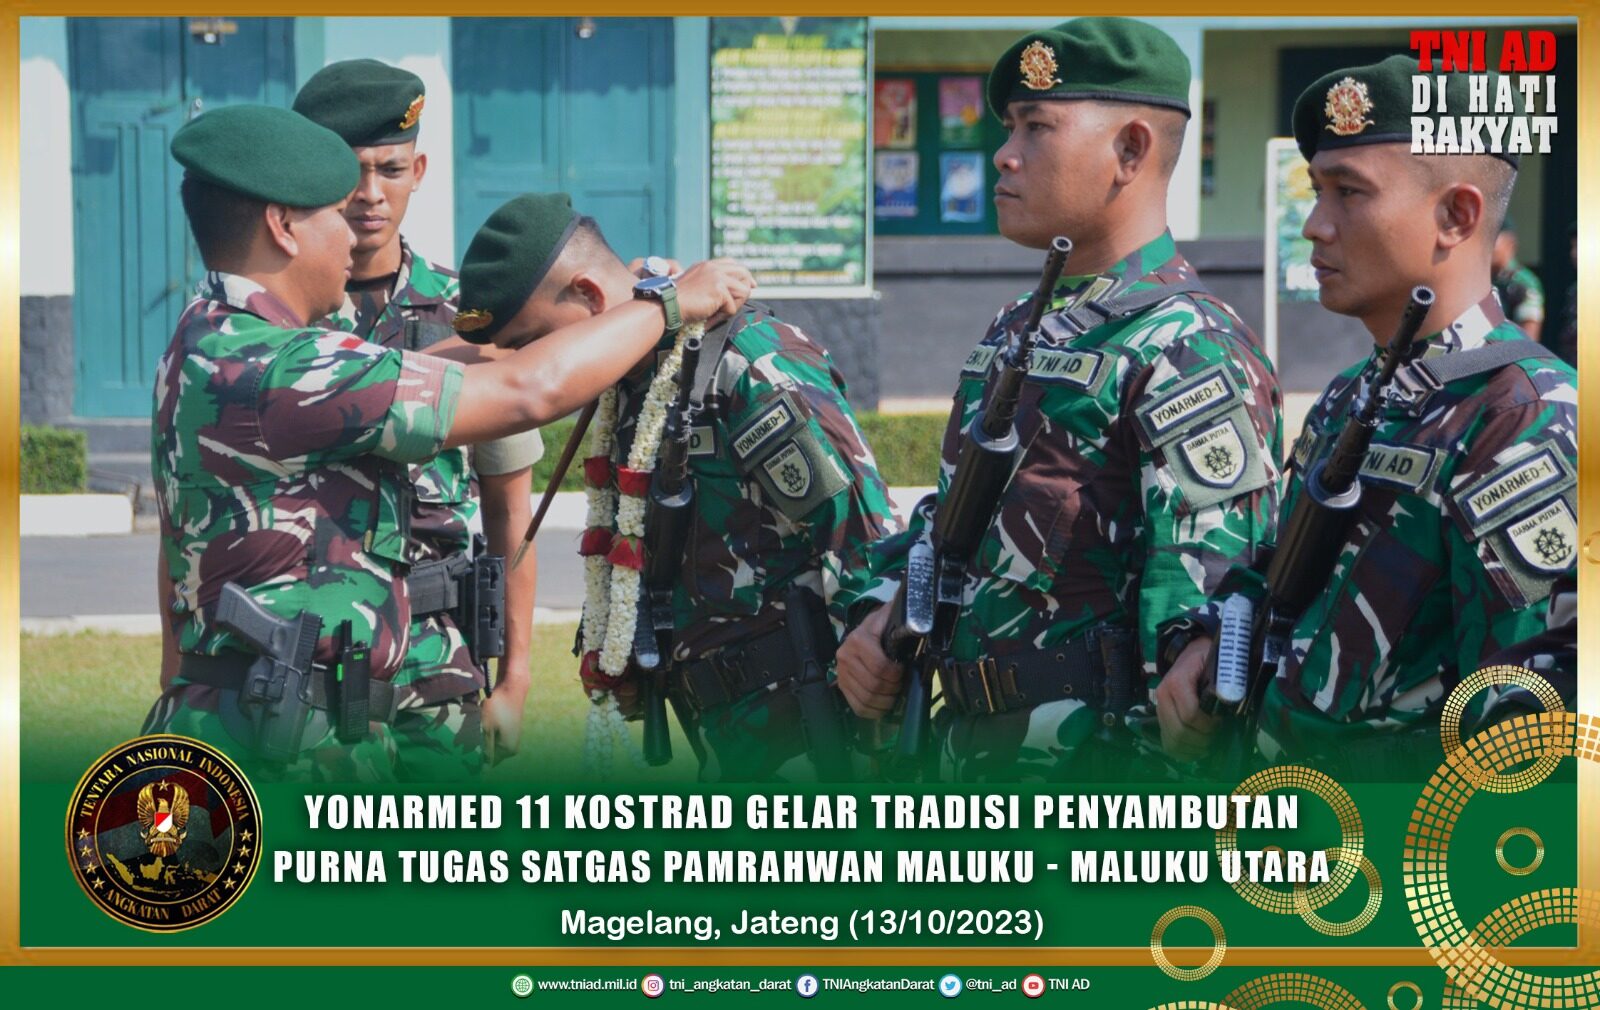 Yonarmed 11 Kostrad Gelar Tradisi Penyambutan Purna Tugas Satgas Pamrahwan Maluku - Maluku Utara